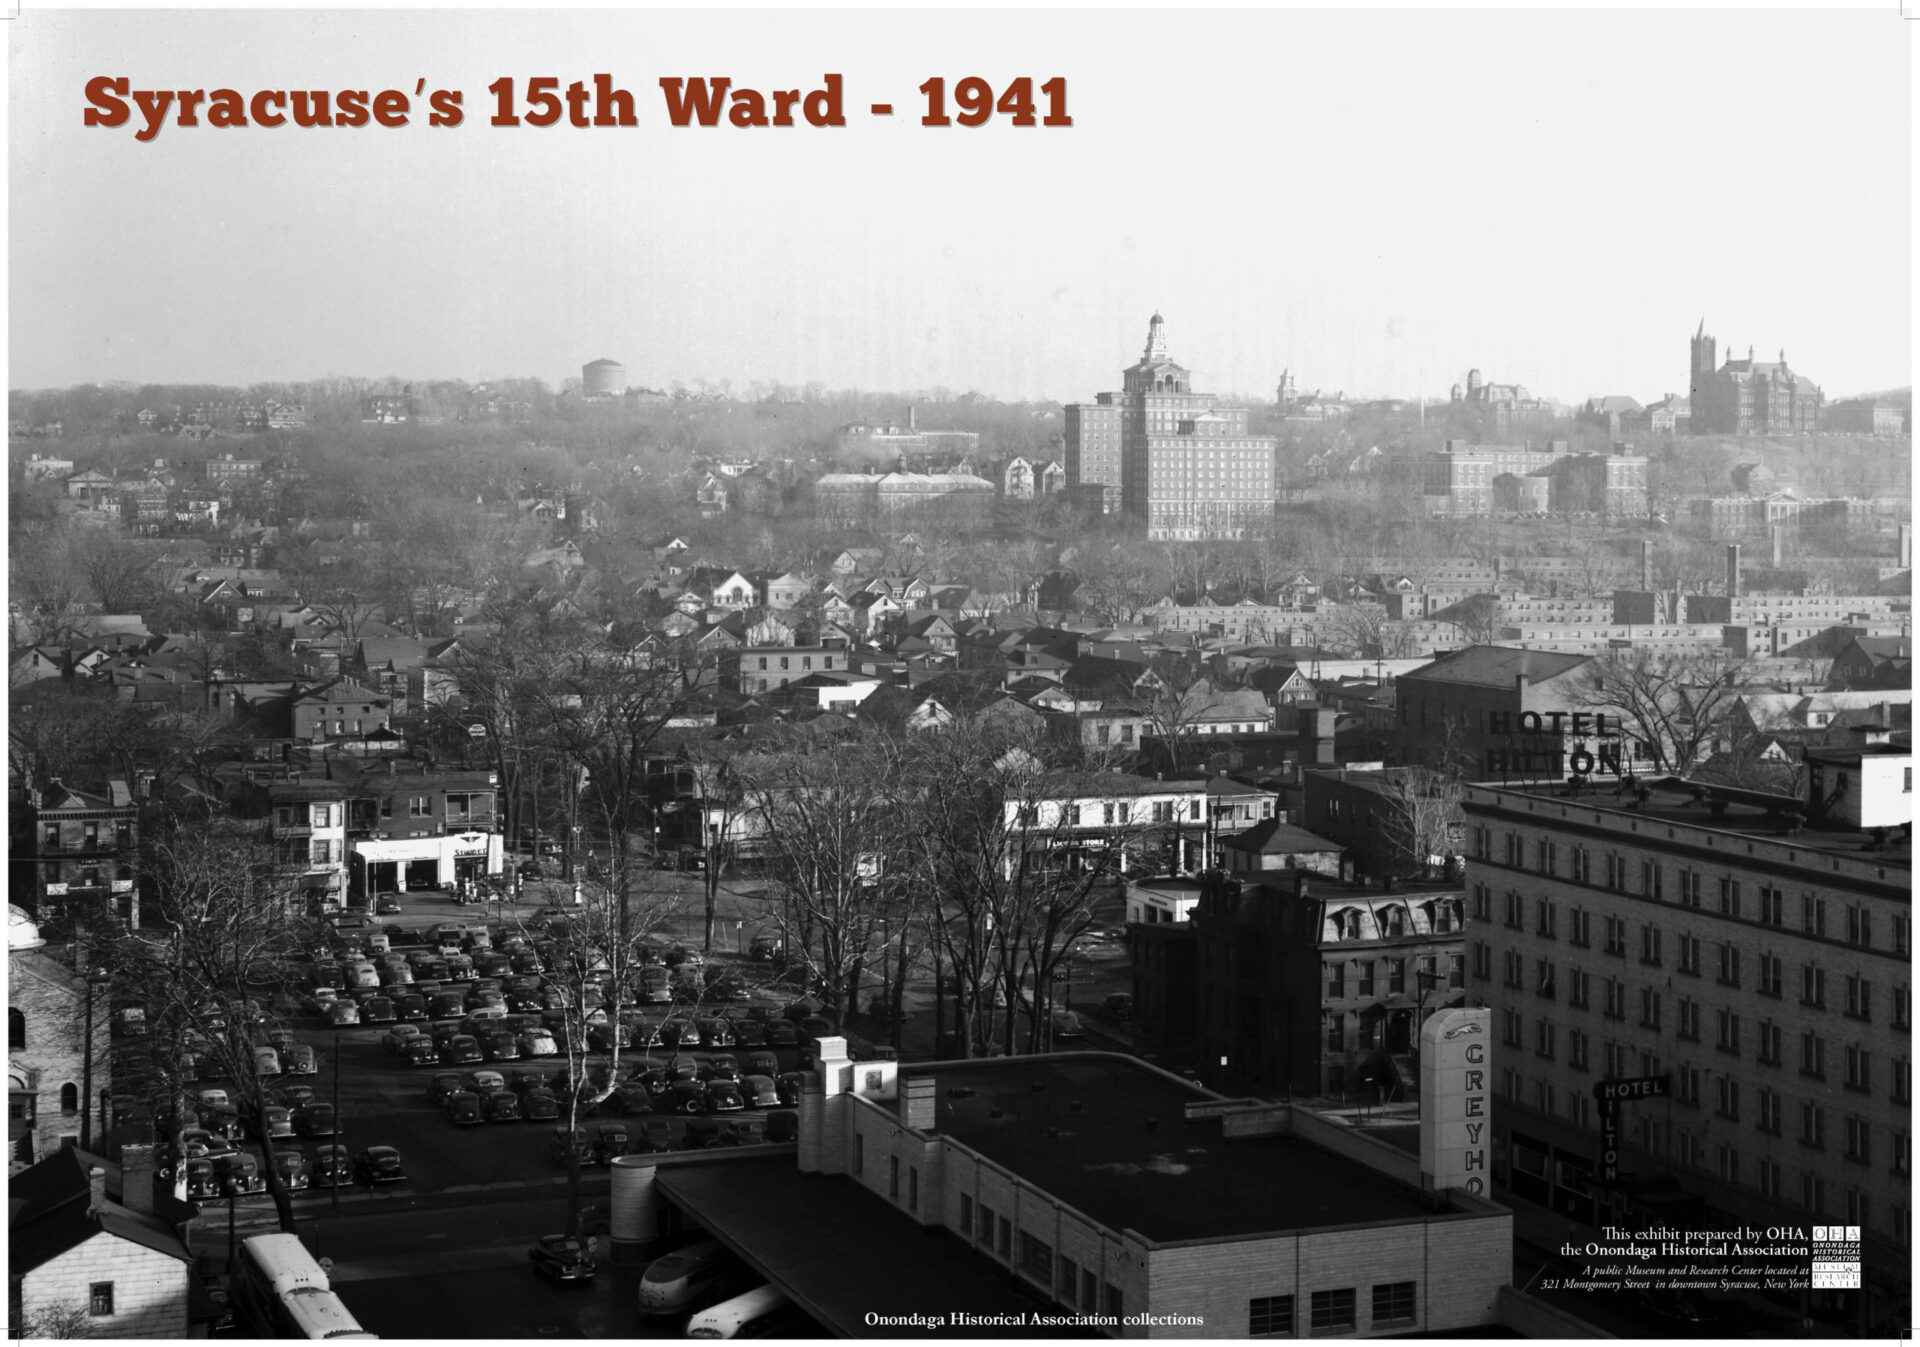 Historic landscape shot of 15th ward in 1941